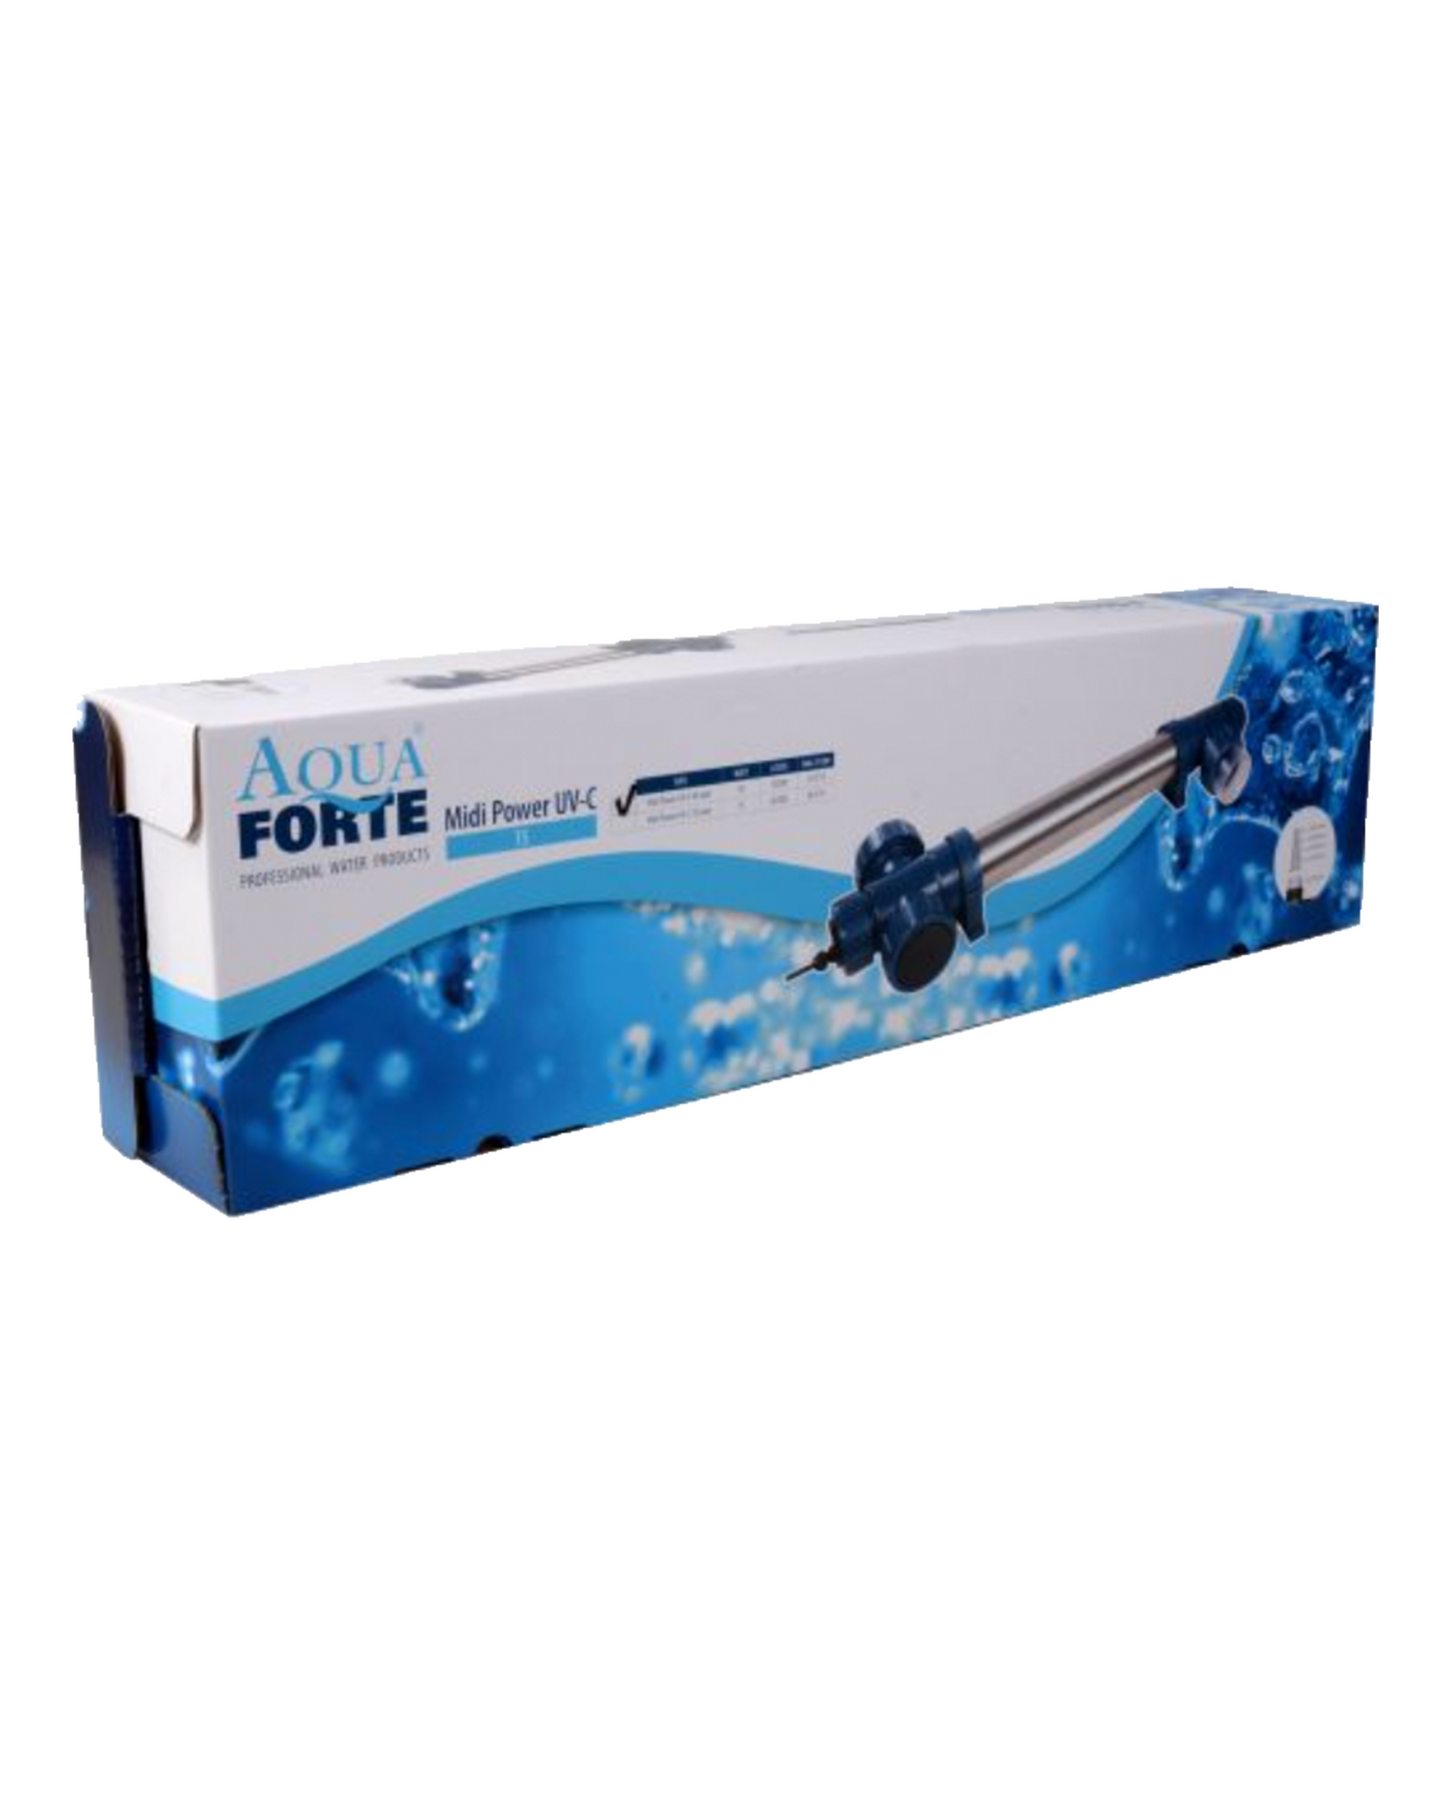 AquaForte midi Power UV-C